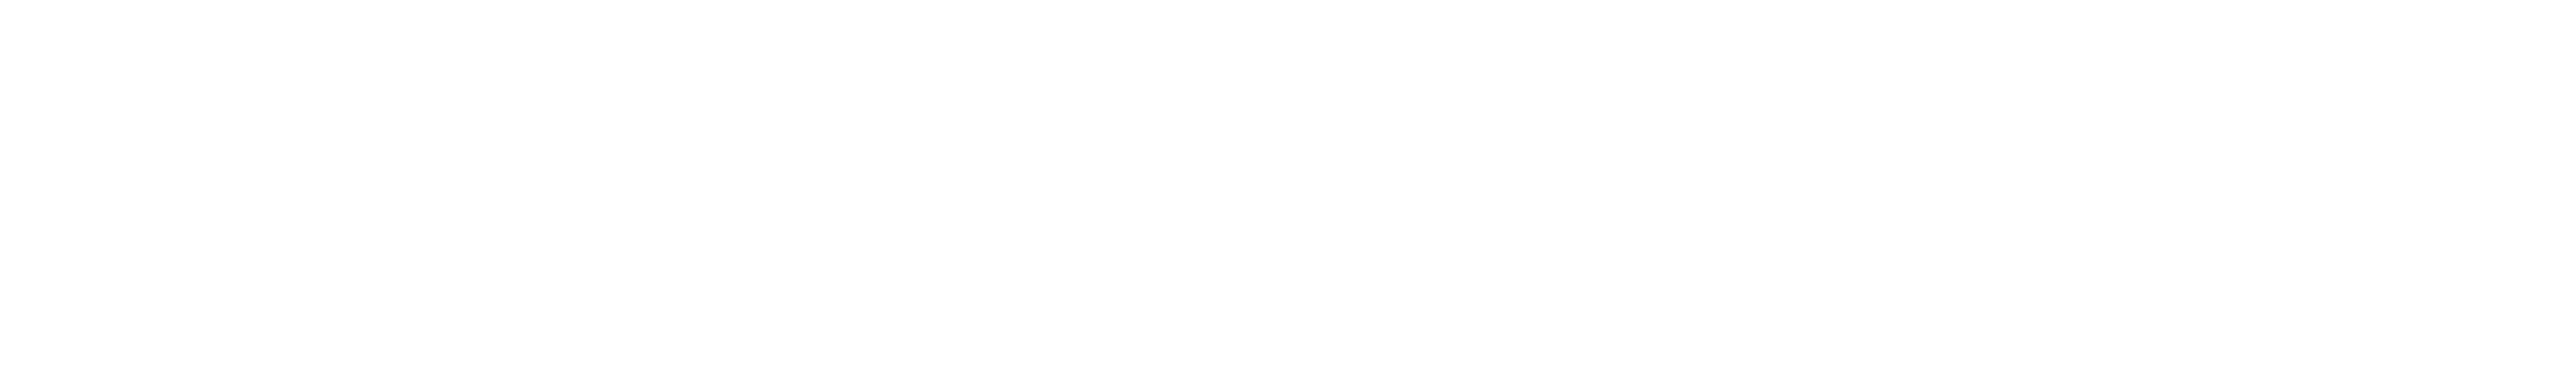 Wit JBL logo